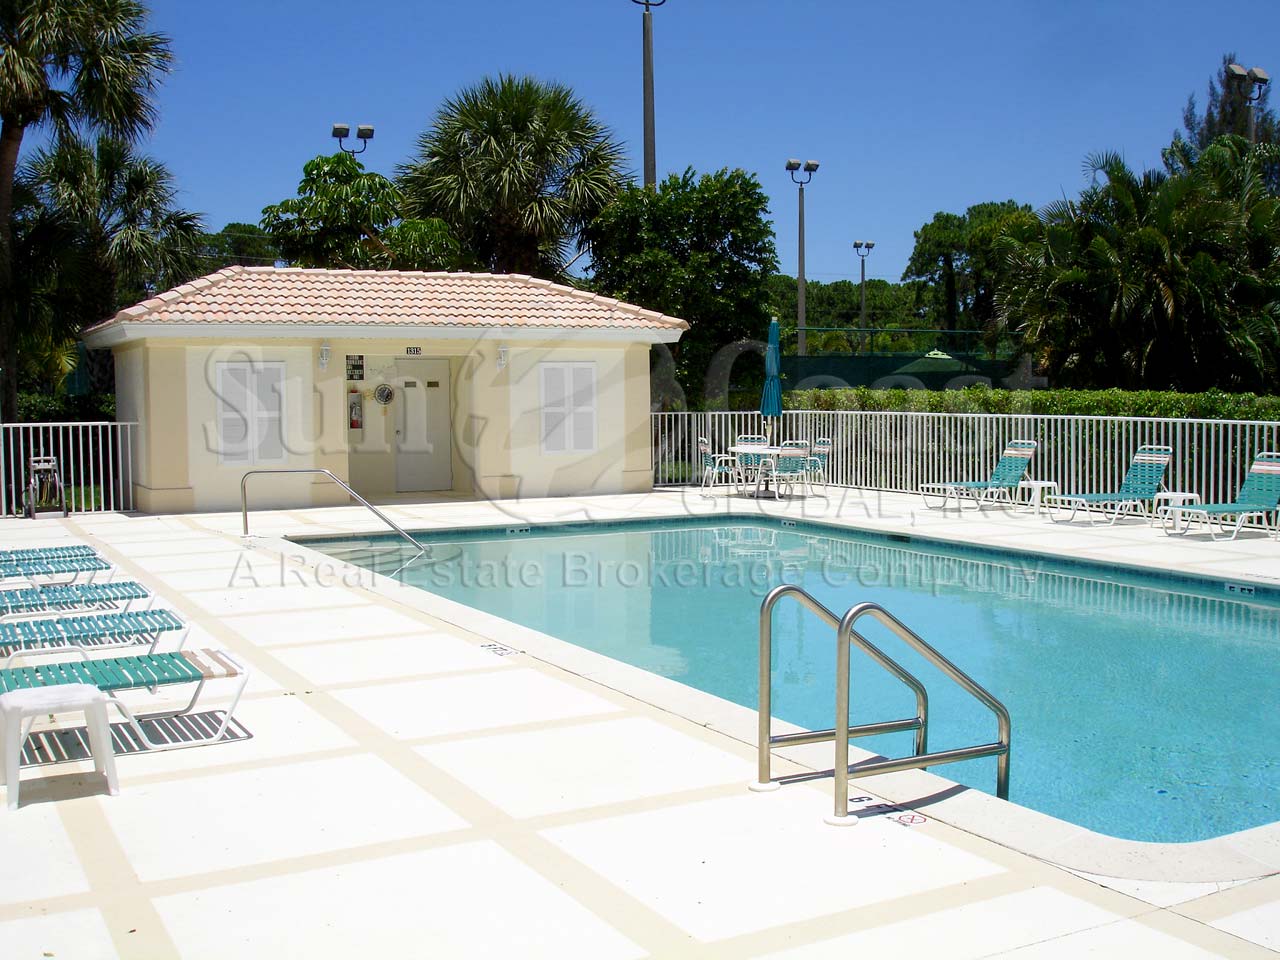 Charleston Square pool